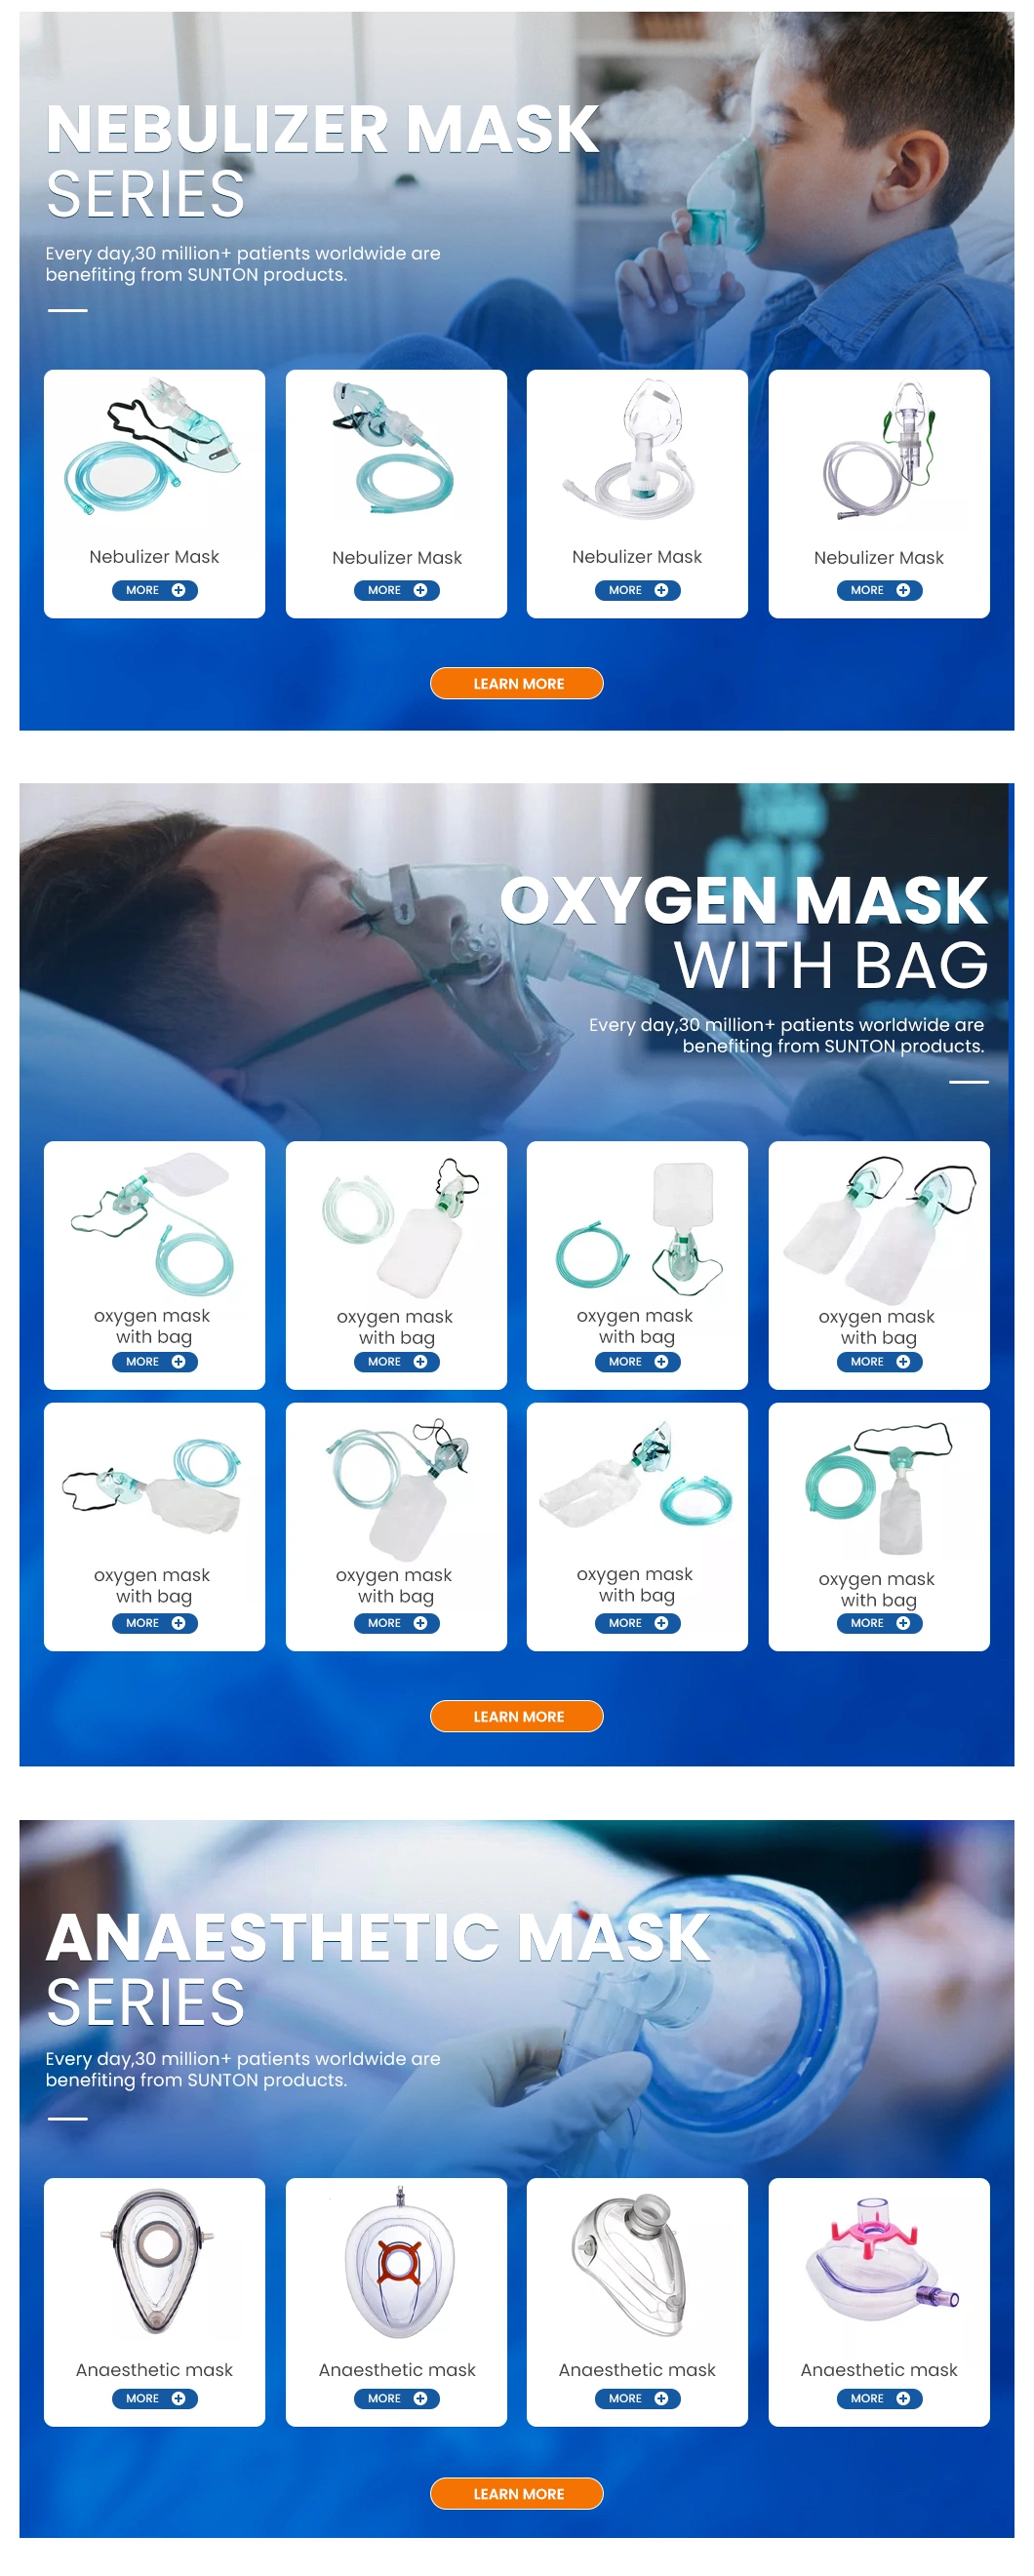 Sunton China Oxygen Mask Factory Measurement 100PCS/CTN L Disposable Oxygen Mask Disposable Medical Usage High Concentration Nebulizer Kit Facial Oxygen Mask